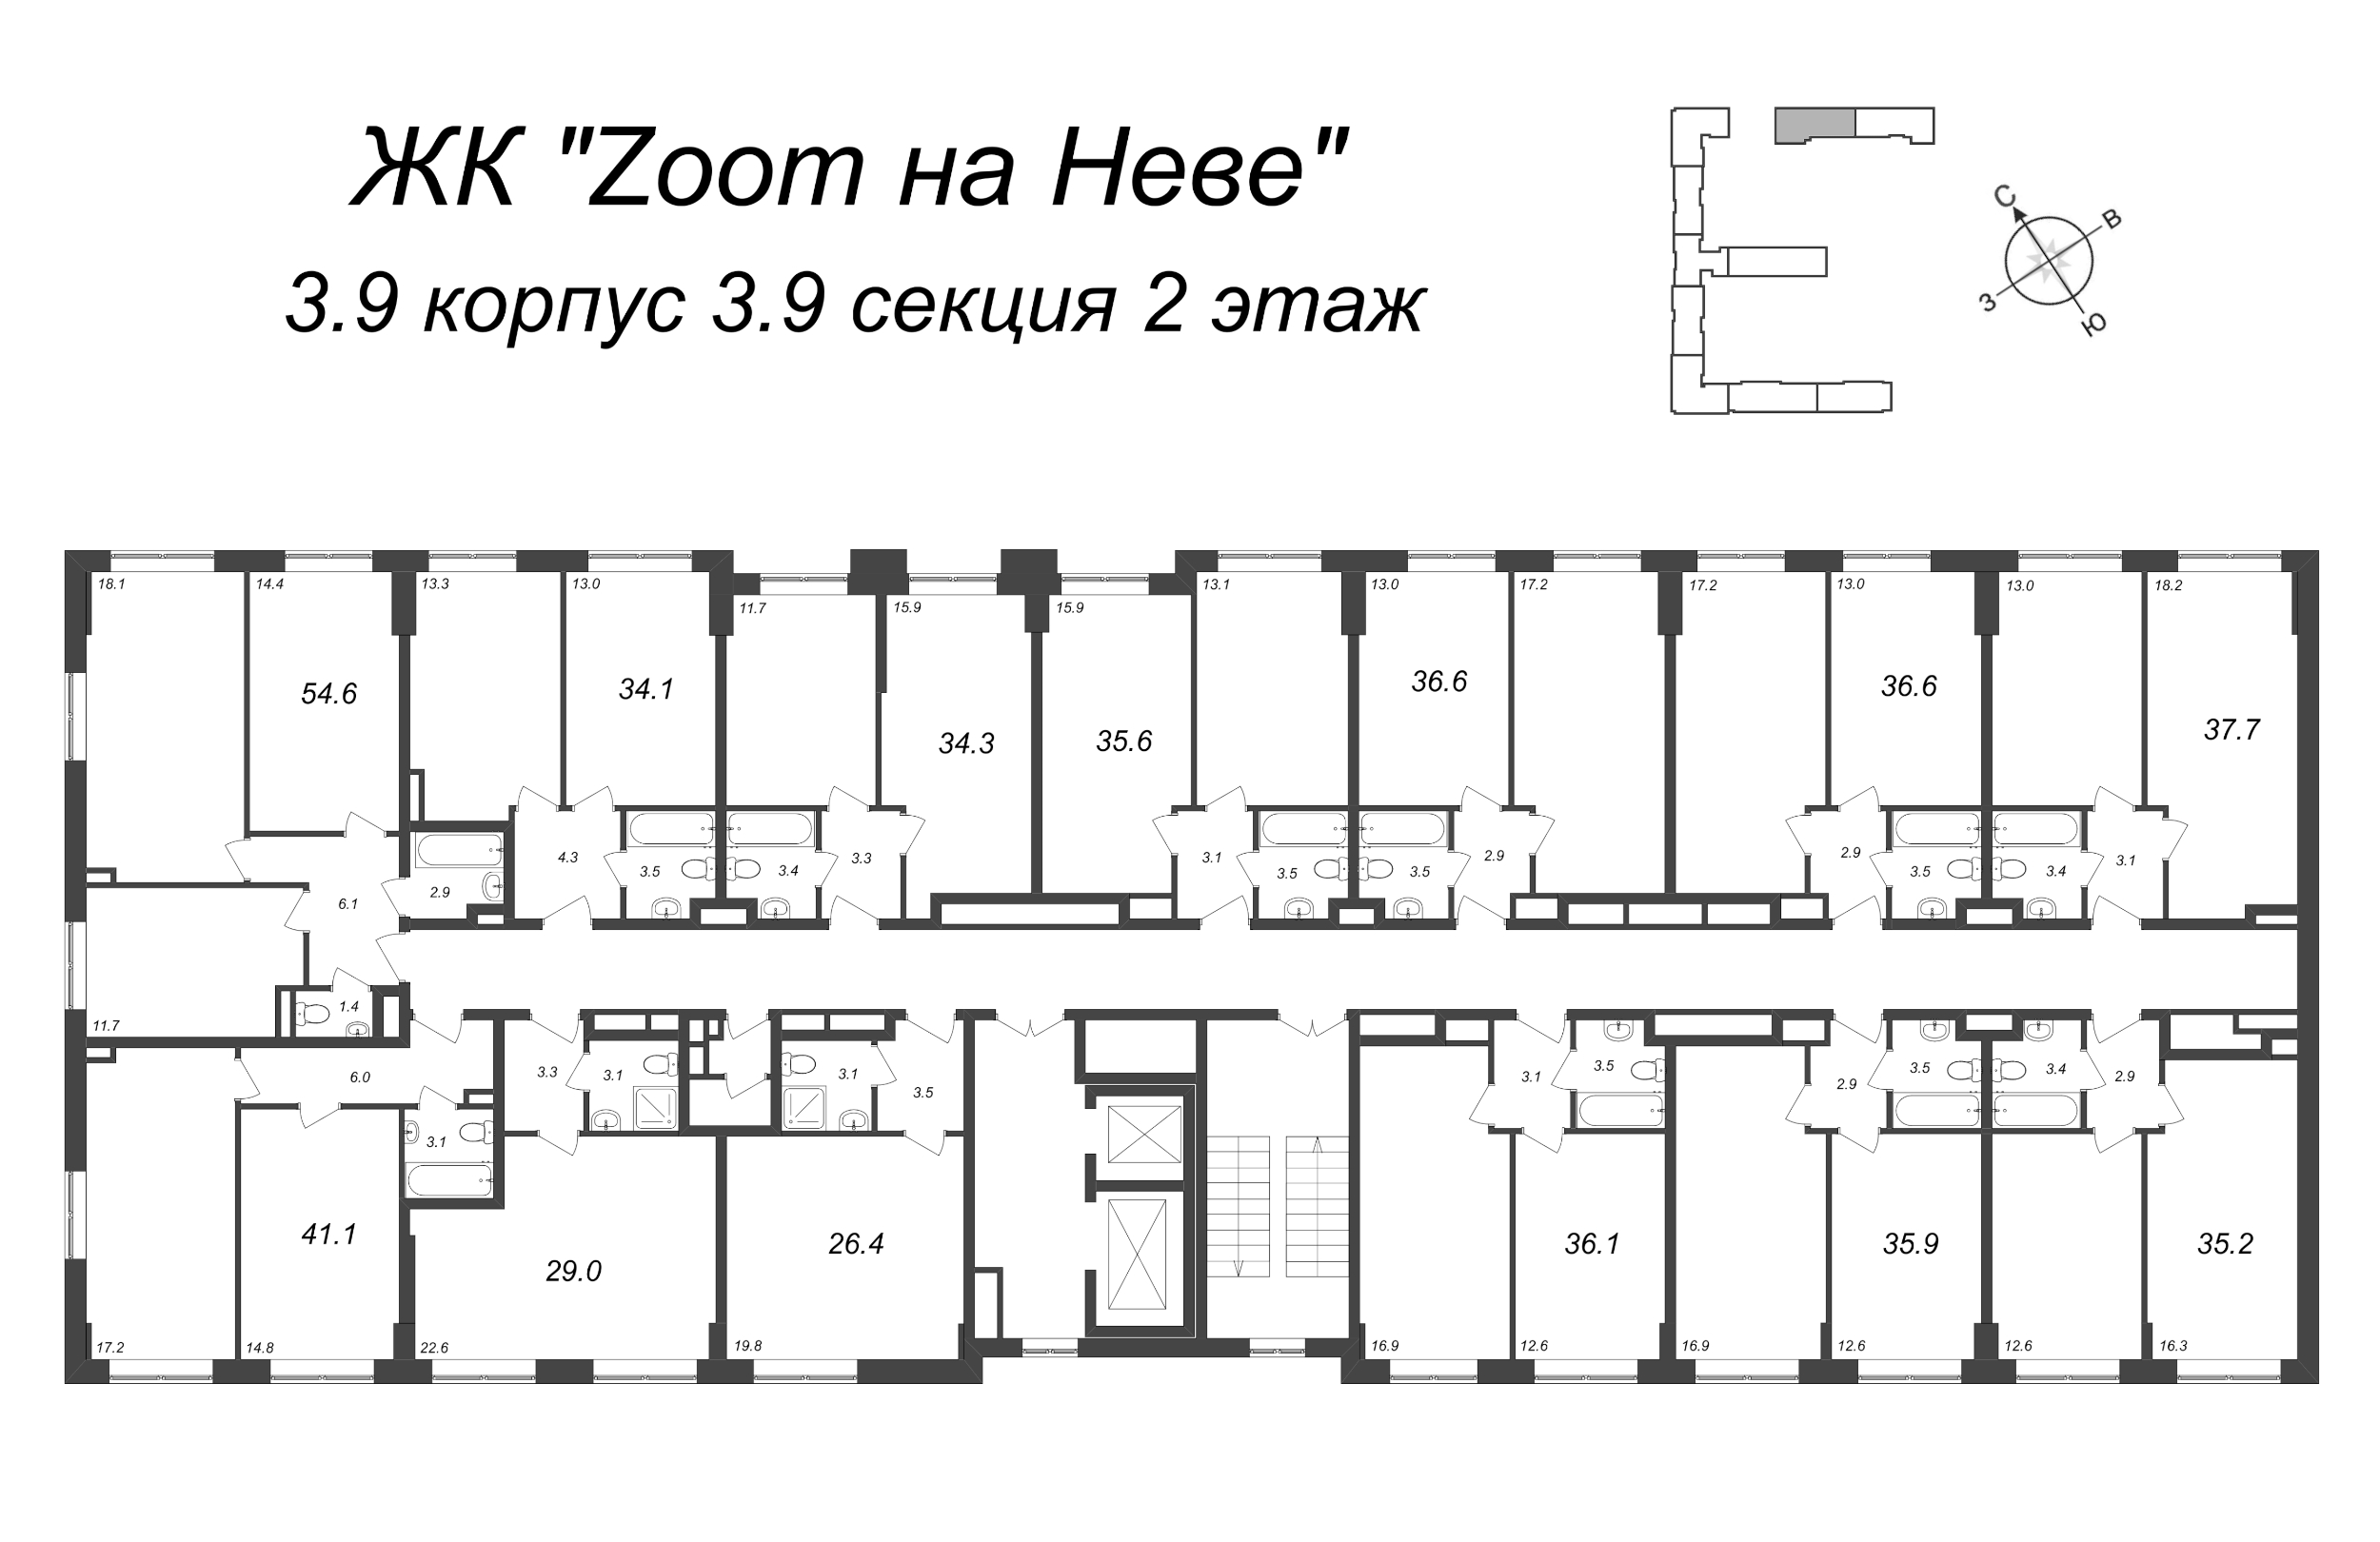 2-комнатная (Евро) квартира, 37.21 м² - планировка этажа